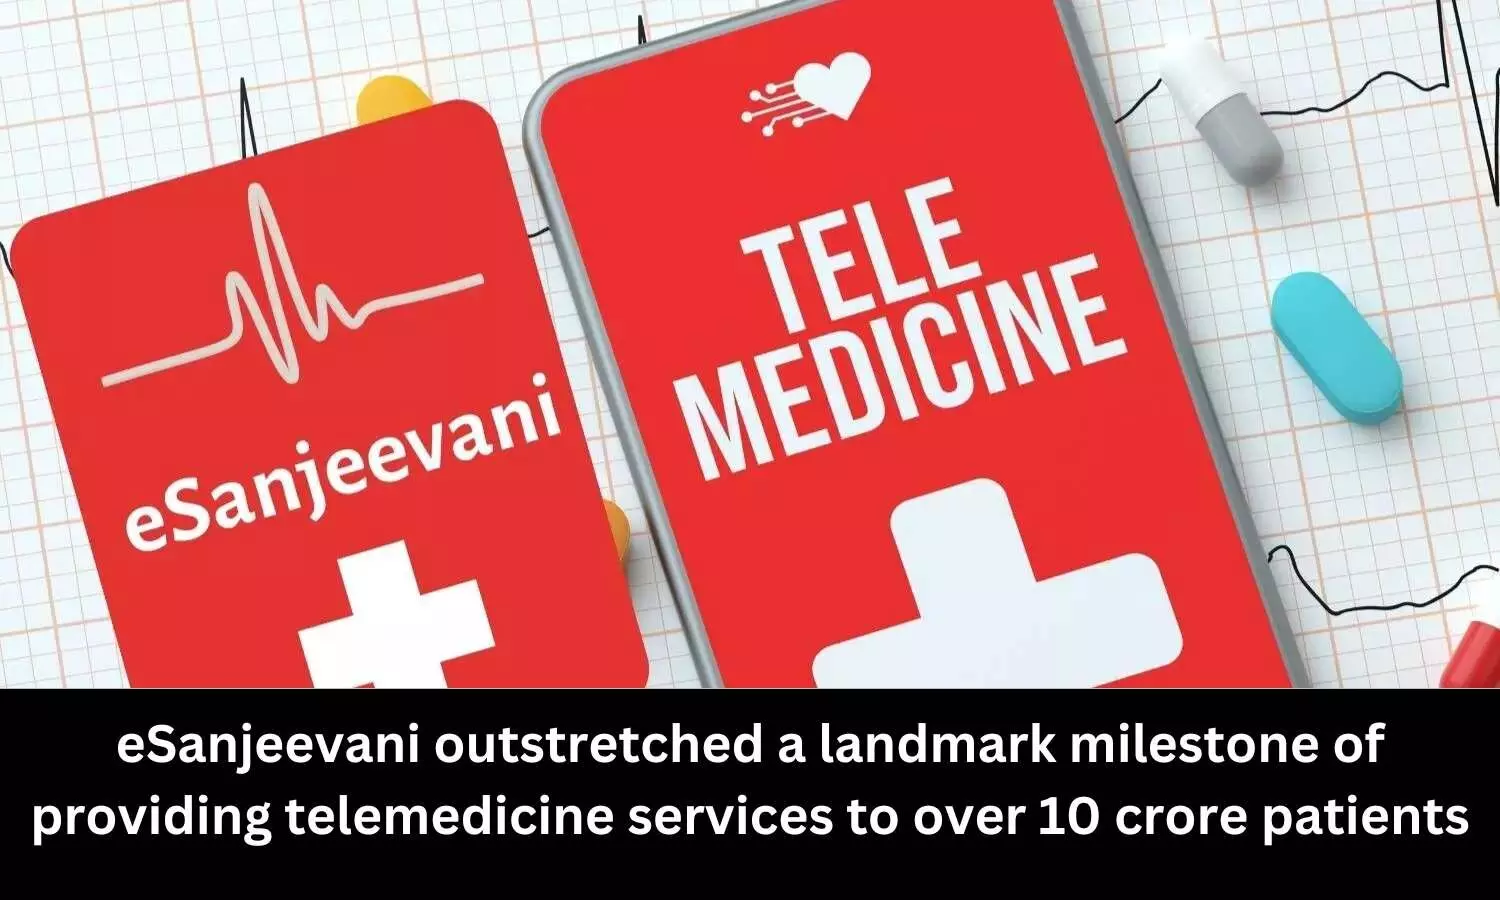 eSanjeevani achieves landmark milestone of providing telemedicine services to 10+ crore patients